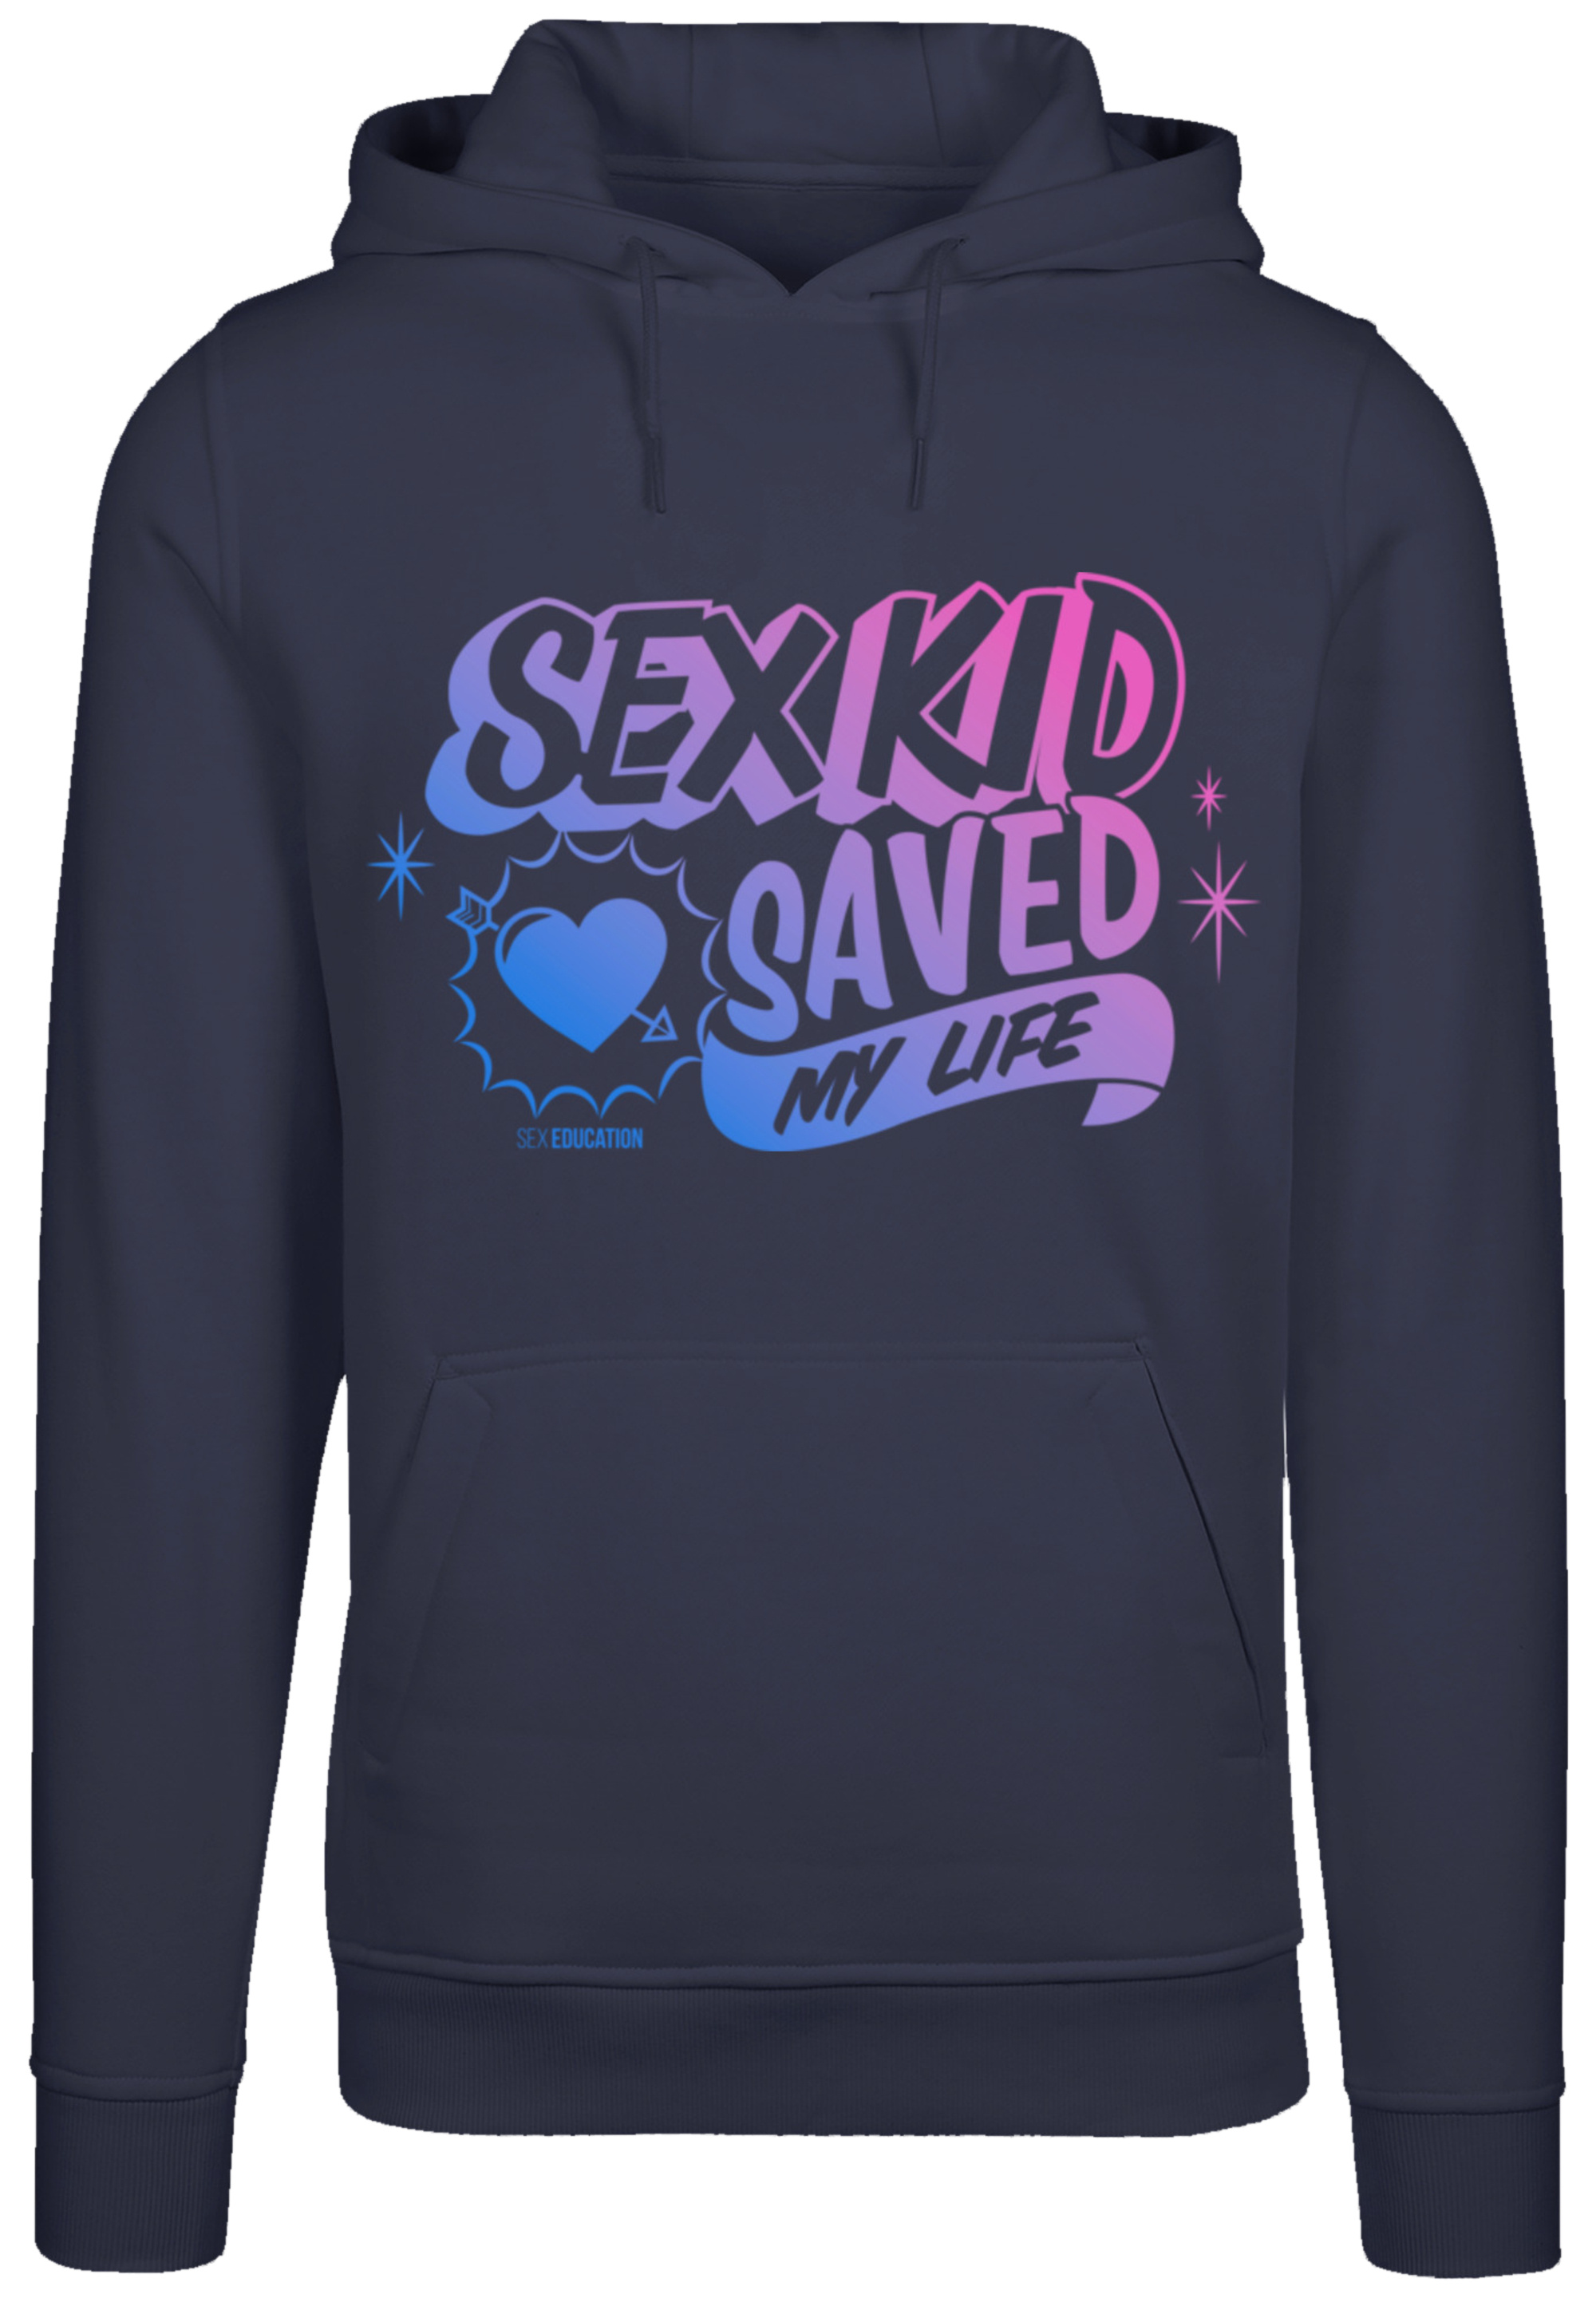 Пуловер F4NT4STIC Hoodie Sex Education Sex Kid Blend Netflix TV Series, темно синий